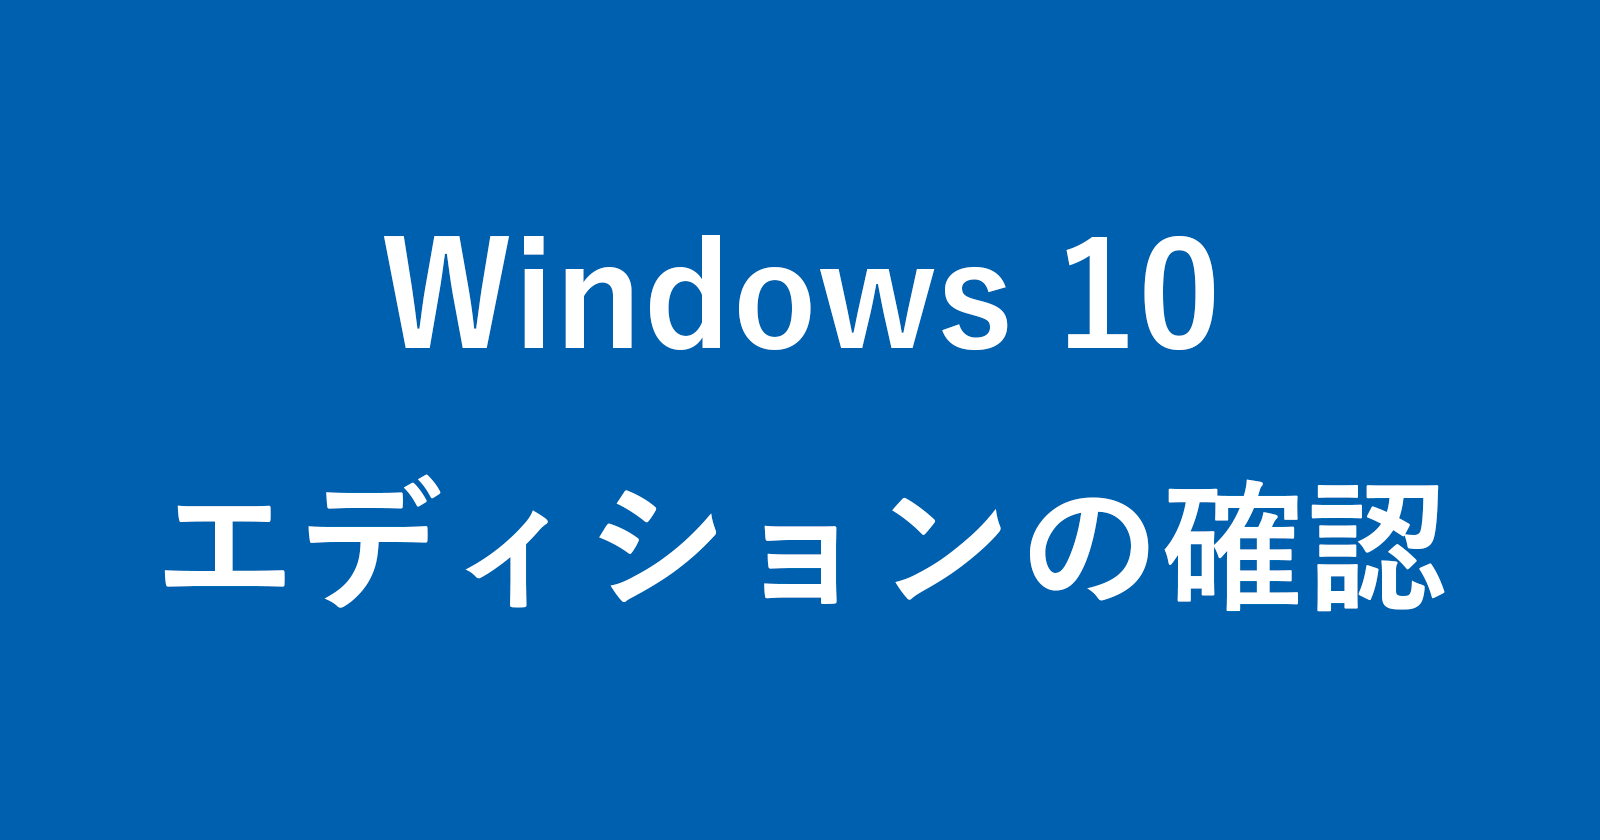 windows 10 edition